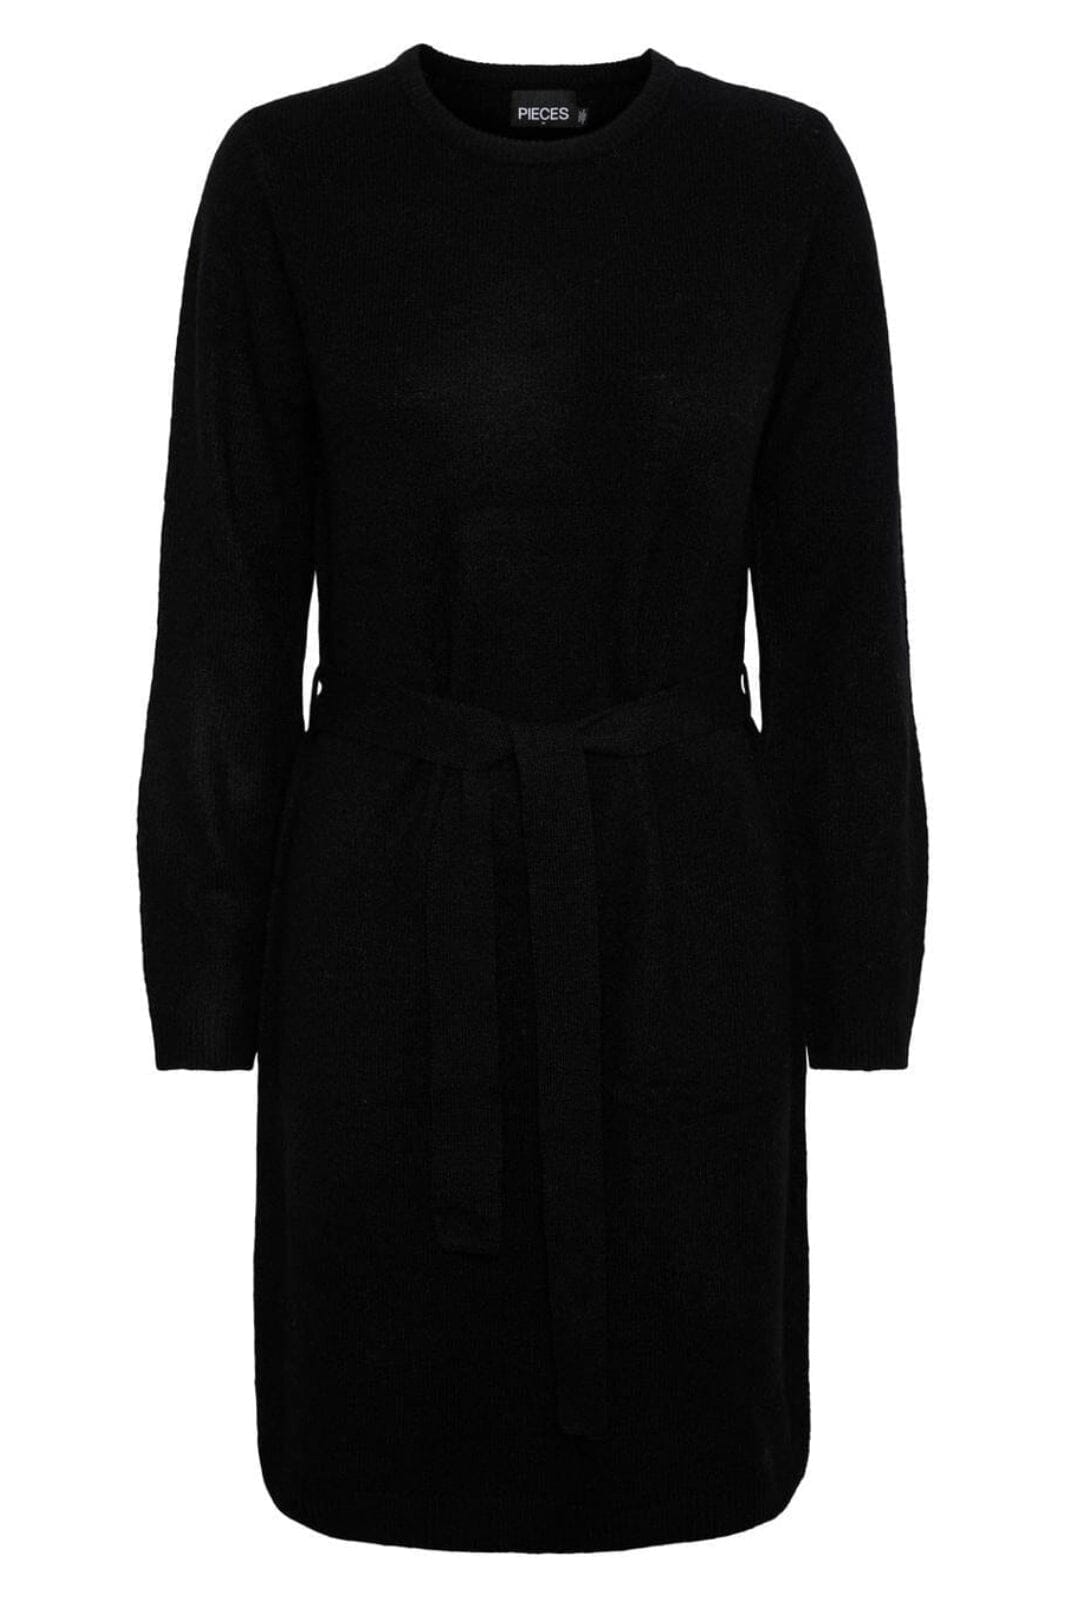 Pieces - Pcjuliana Ls O-Neck Knit Dress - 4250799 Black Kjoler 